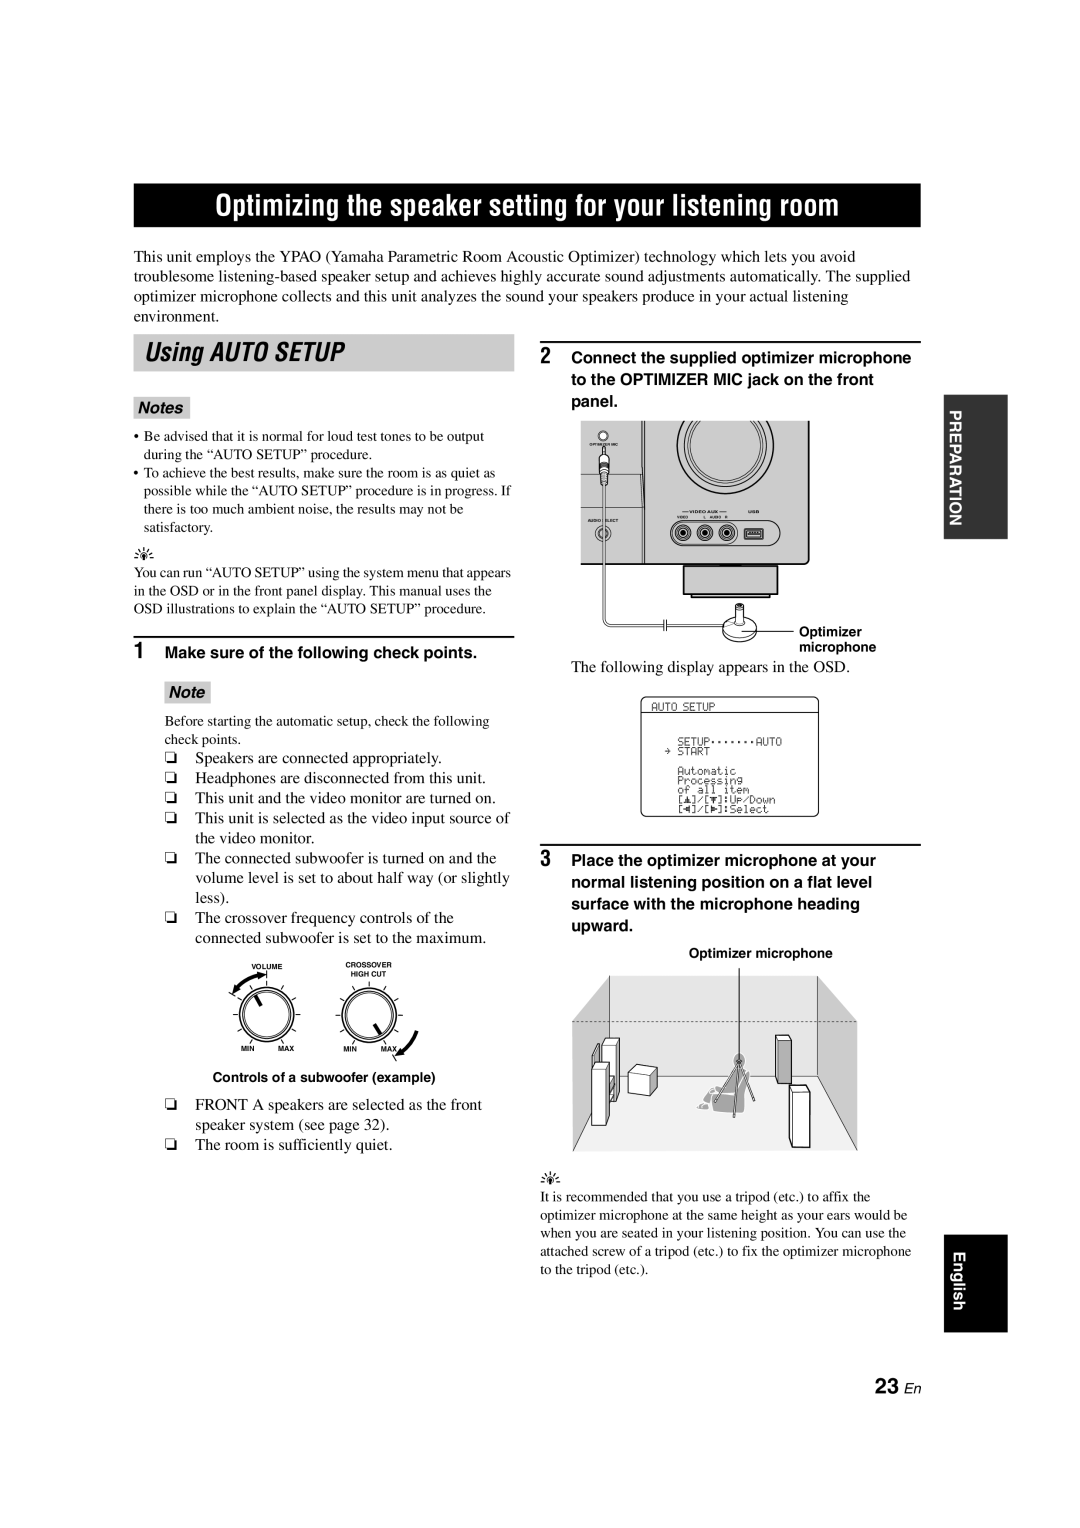 Yamaha DSP-AX463 owner manual Using AUTO SETUP, 23 En, 1Make sure of the following check points 